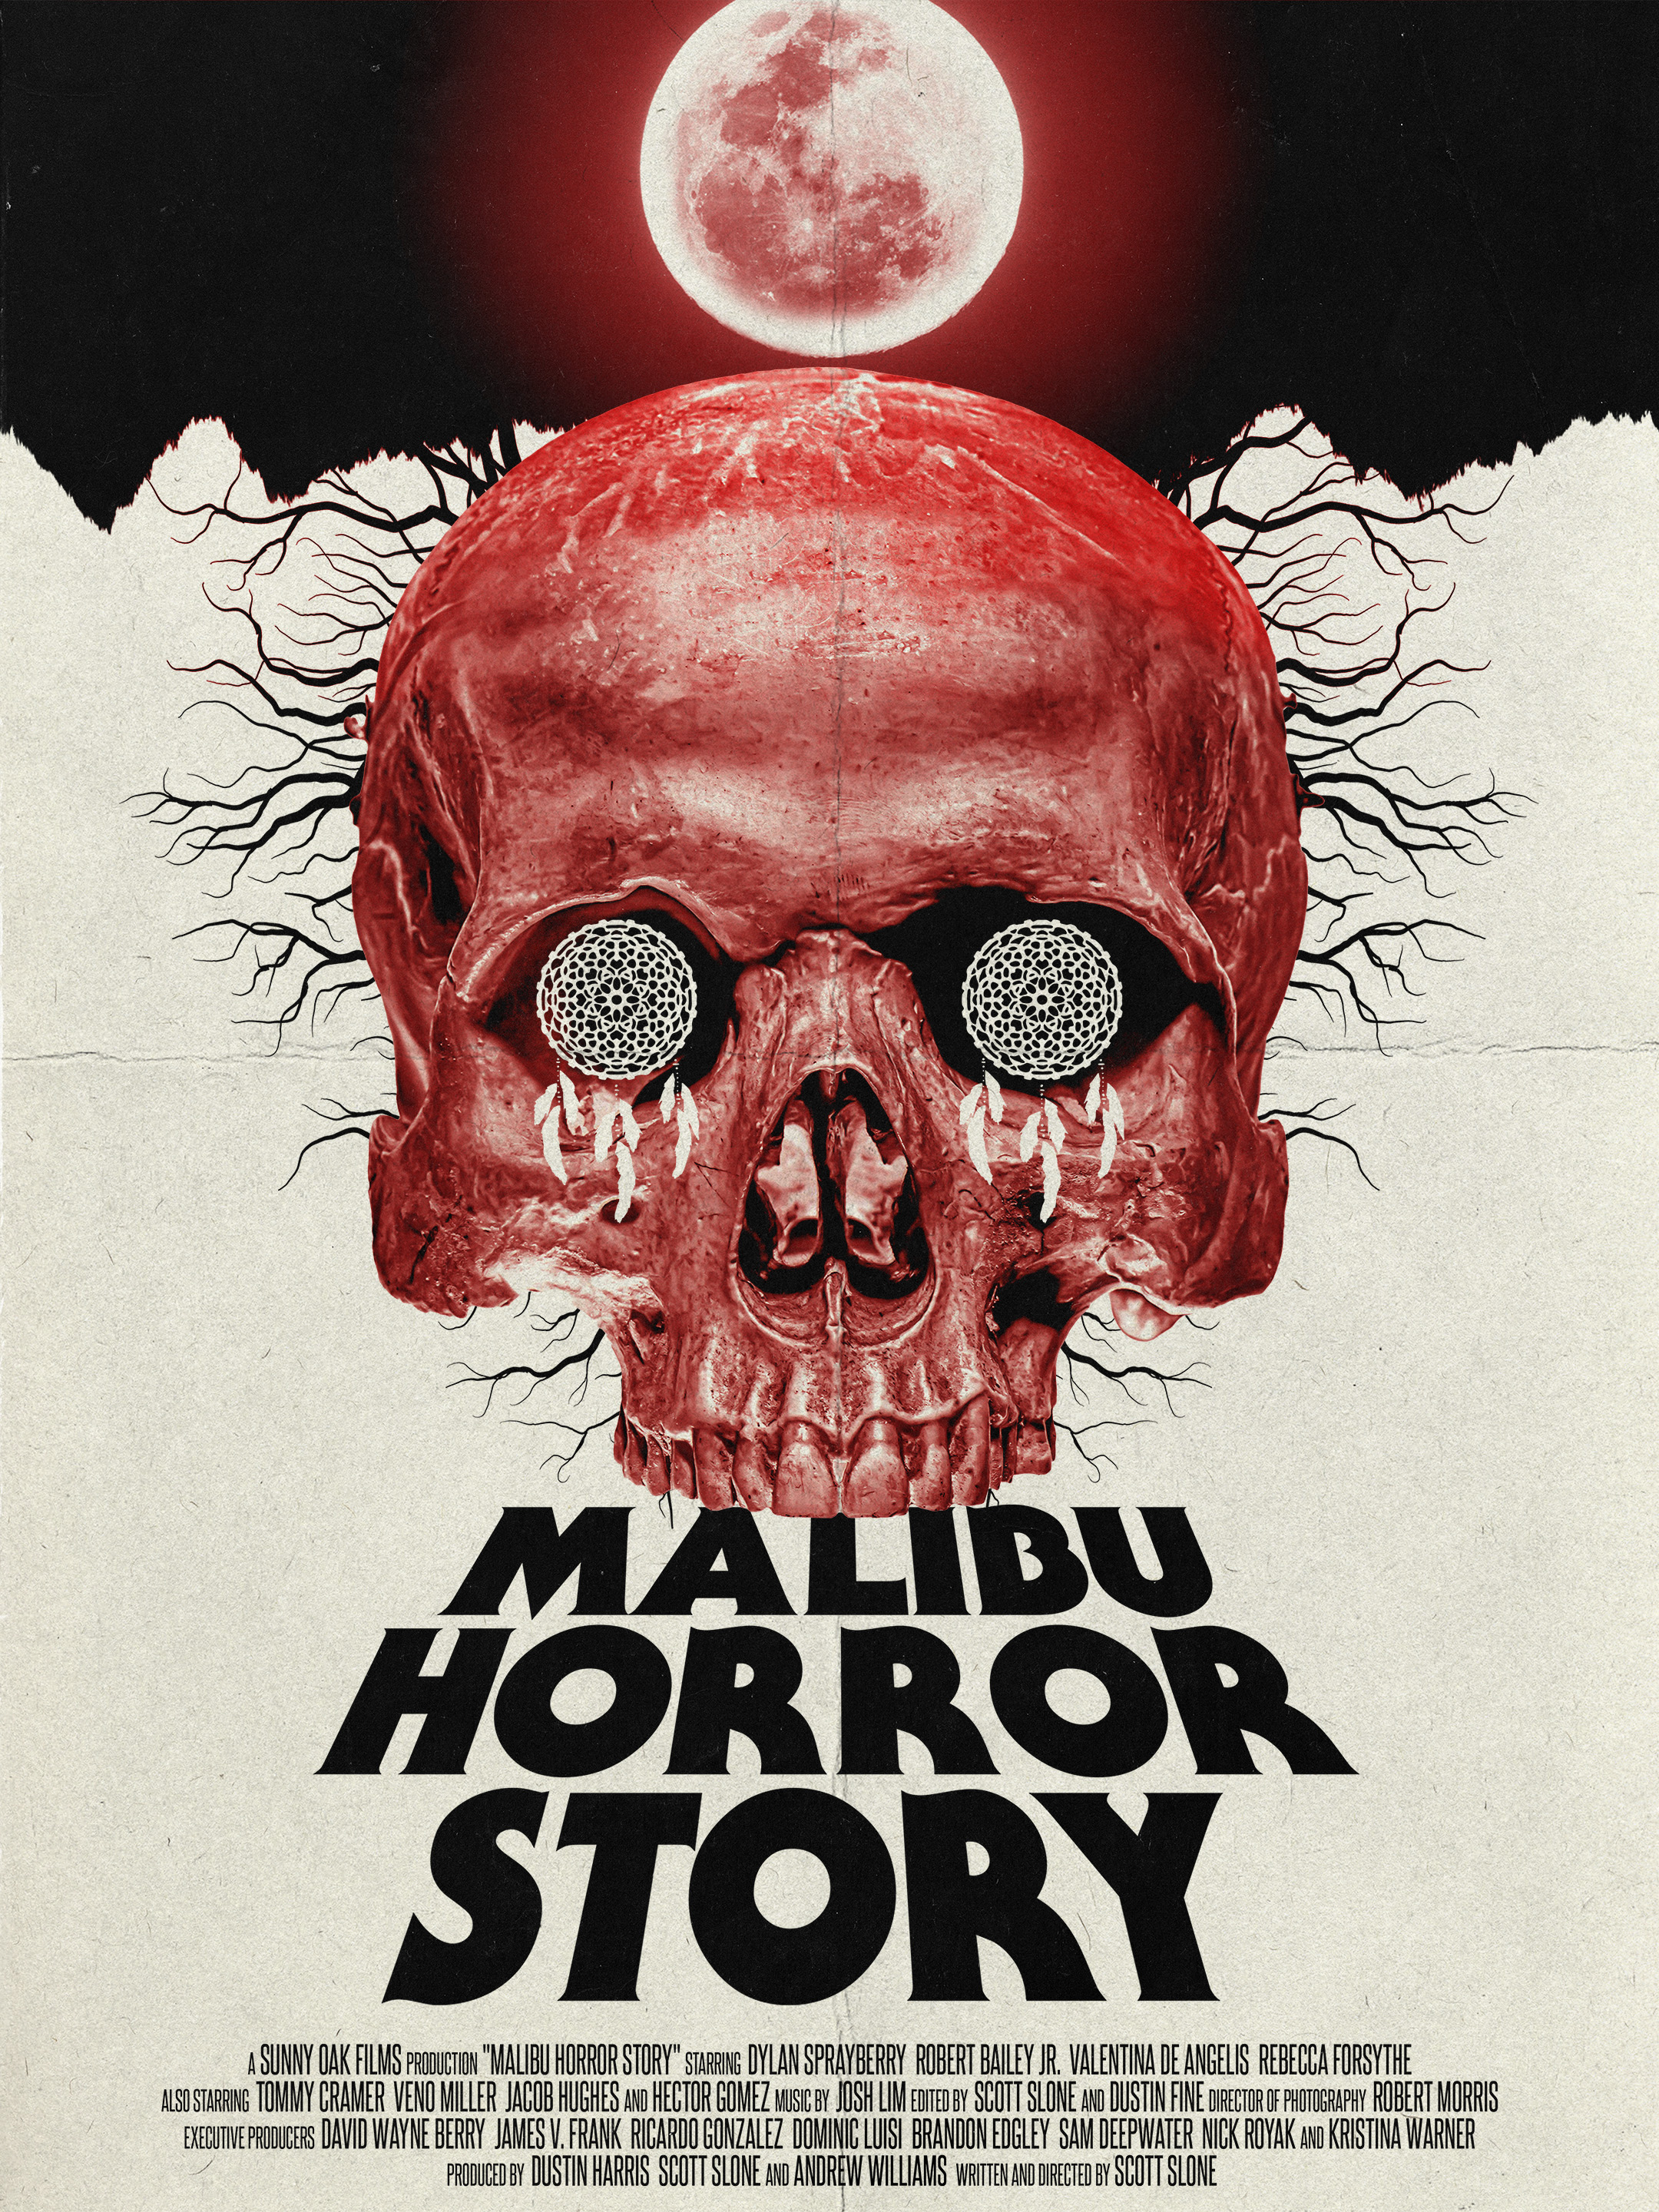 Malibu Horror Story picture